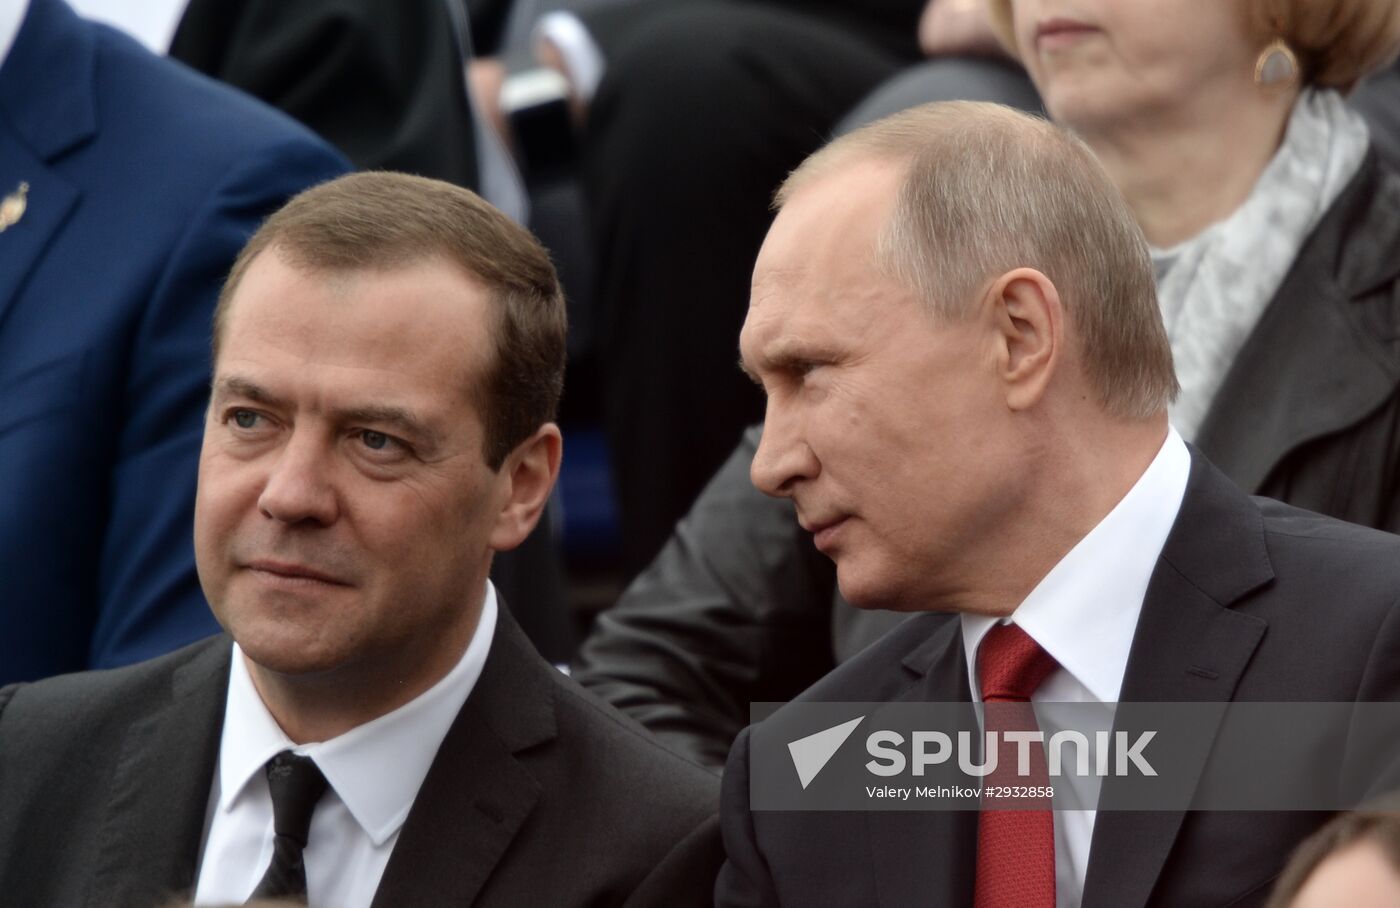 President Vladimir Putin and Prime Minister Dmitry Medvedev at City Day's solemn opening ceremony on Red Square